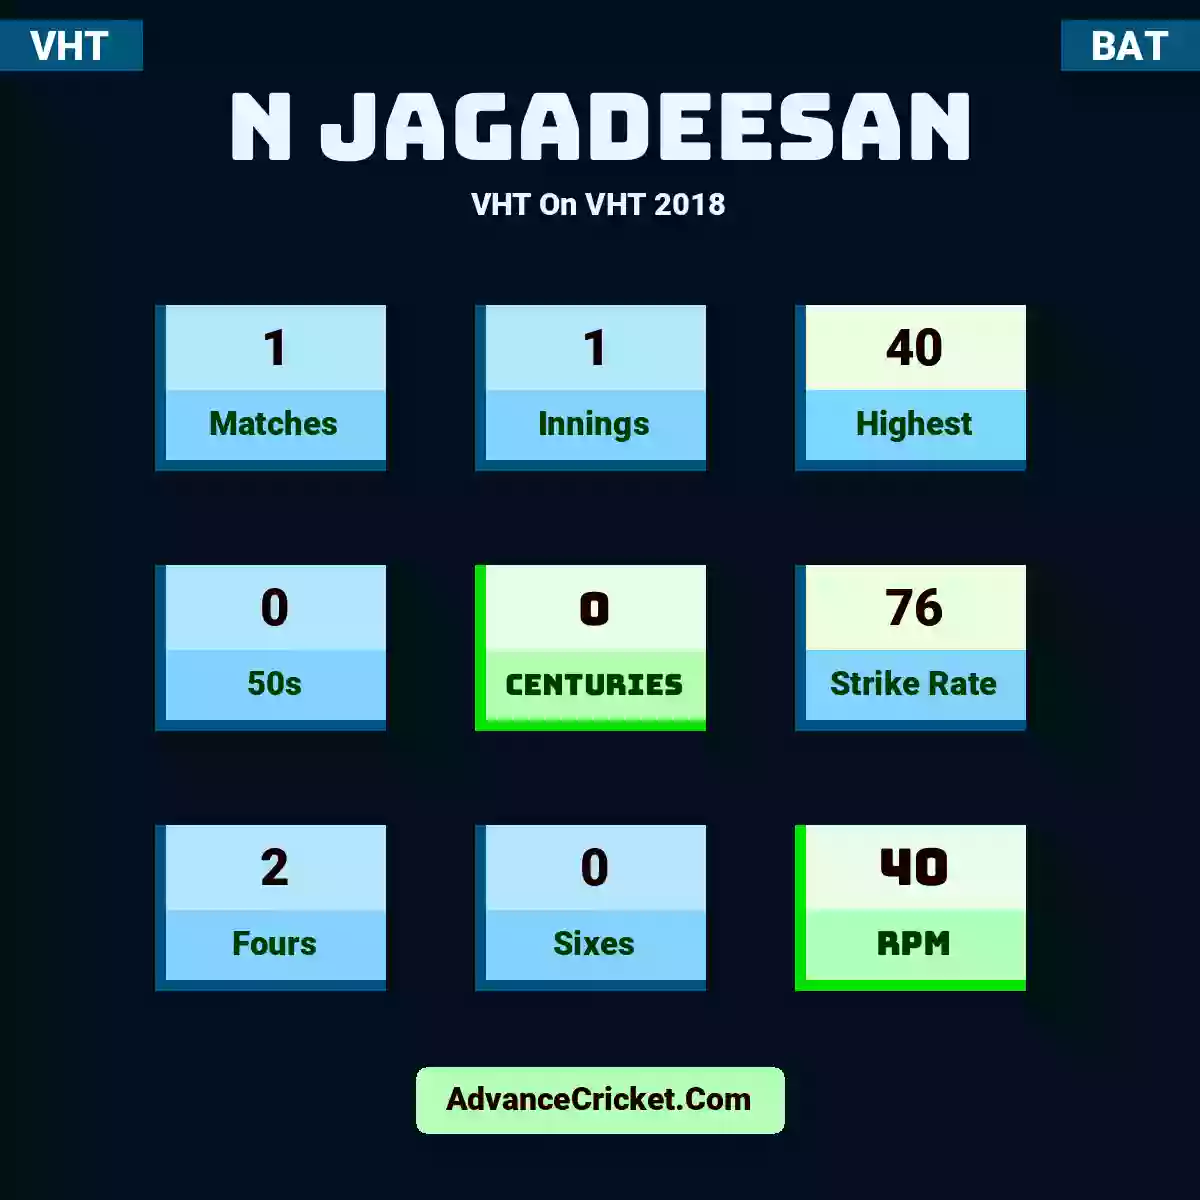 N Jagadeesan VHT  On VHT 2018, N Jagadeesan played 1 matches, scored 40 runs as highest, 0 half-centuries, and 0 centuries, with a strike rate of 76. N.Jagadeesan hit 2 fours and 0 sixes, with an RPM of 40.